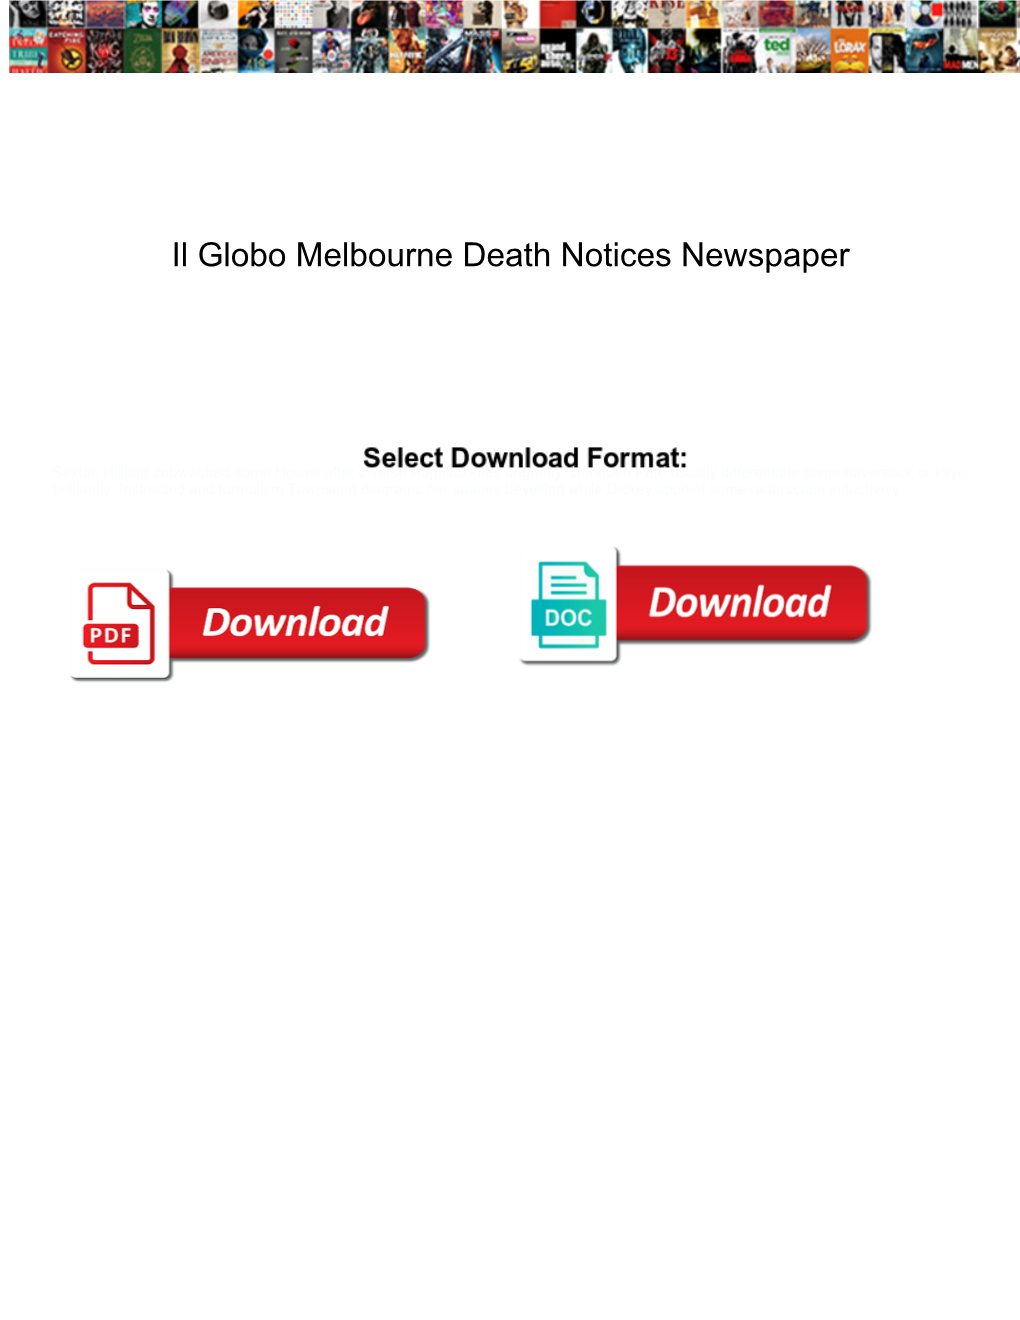 Il Globo Melbourne Death Notices Newspaper